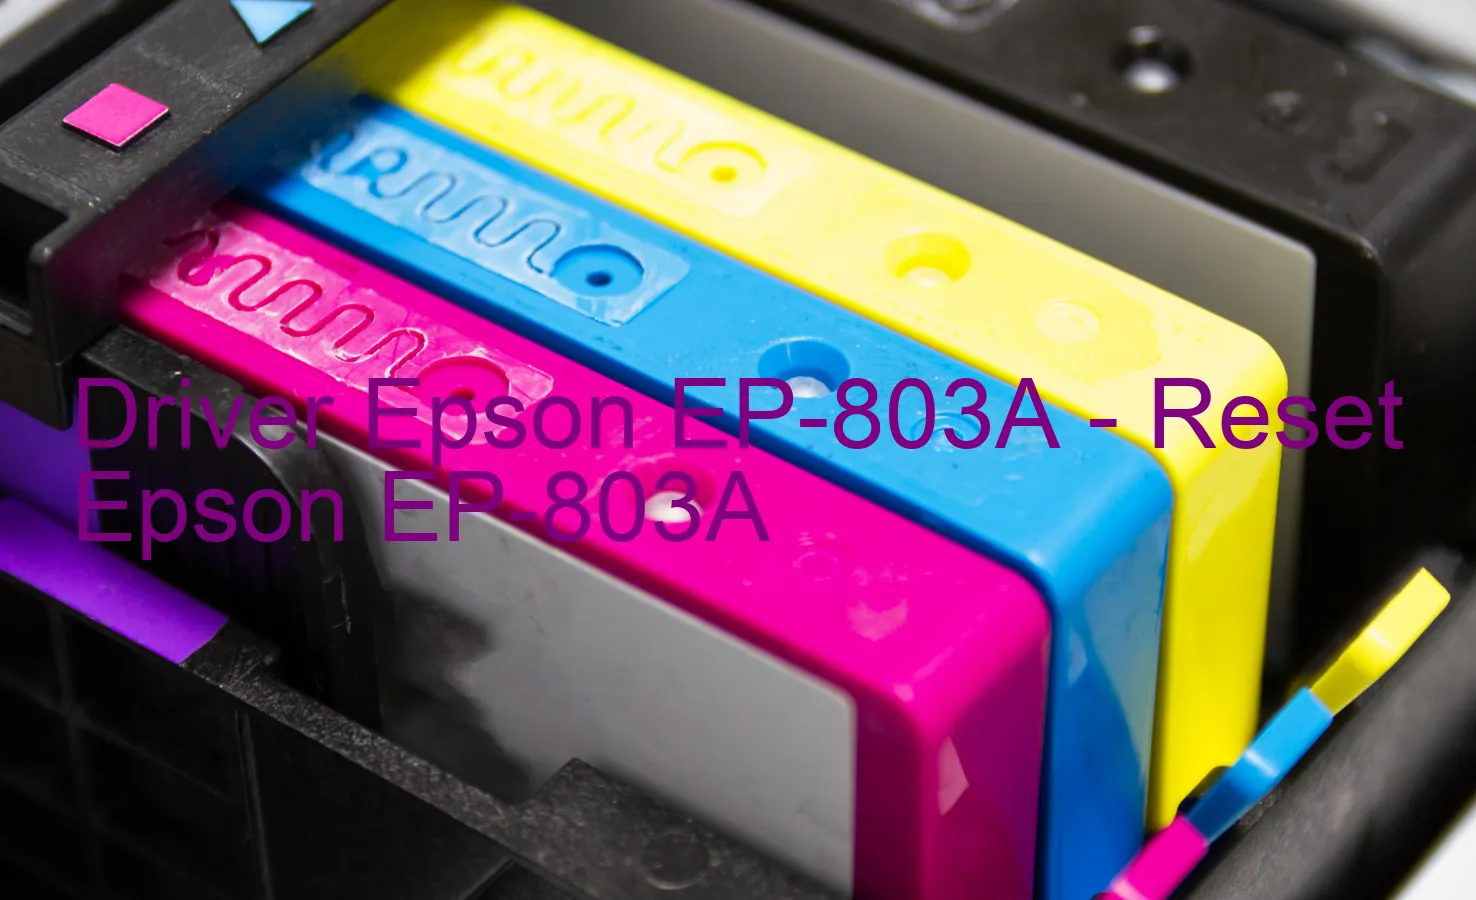 Epson EP-803Aのドライバー、Epson EP-803Aのリセットソフトウェア